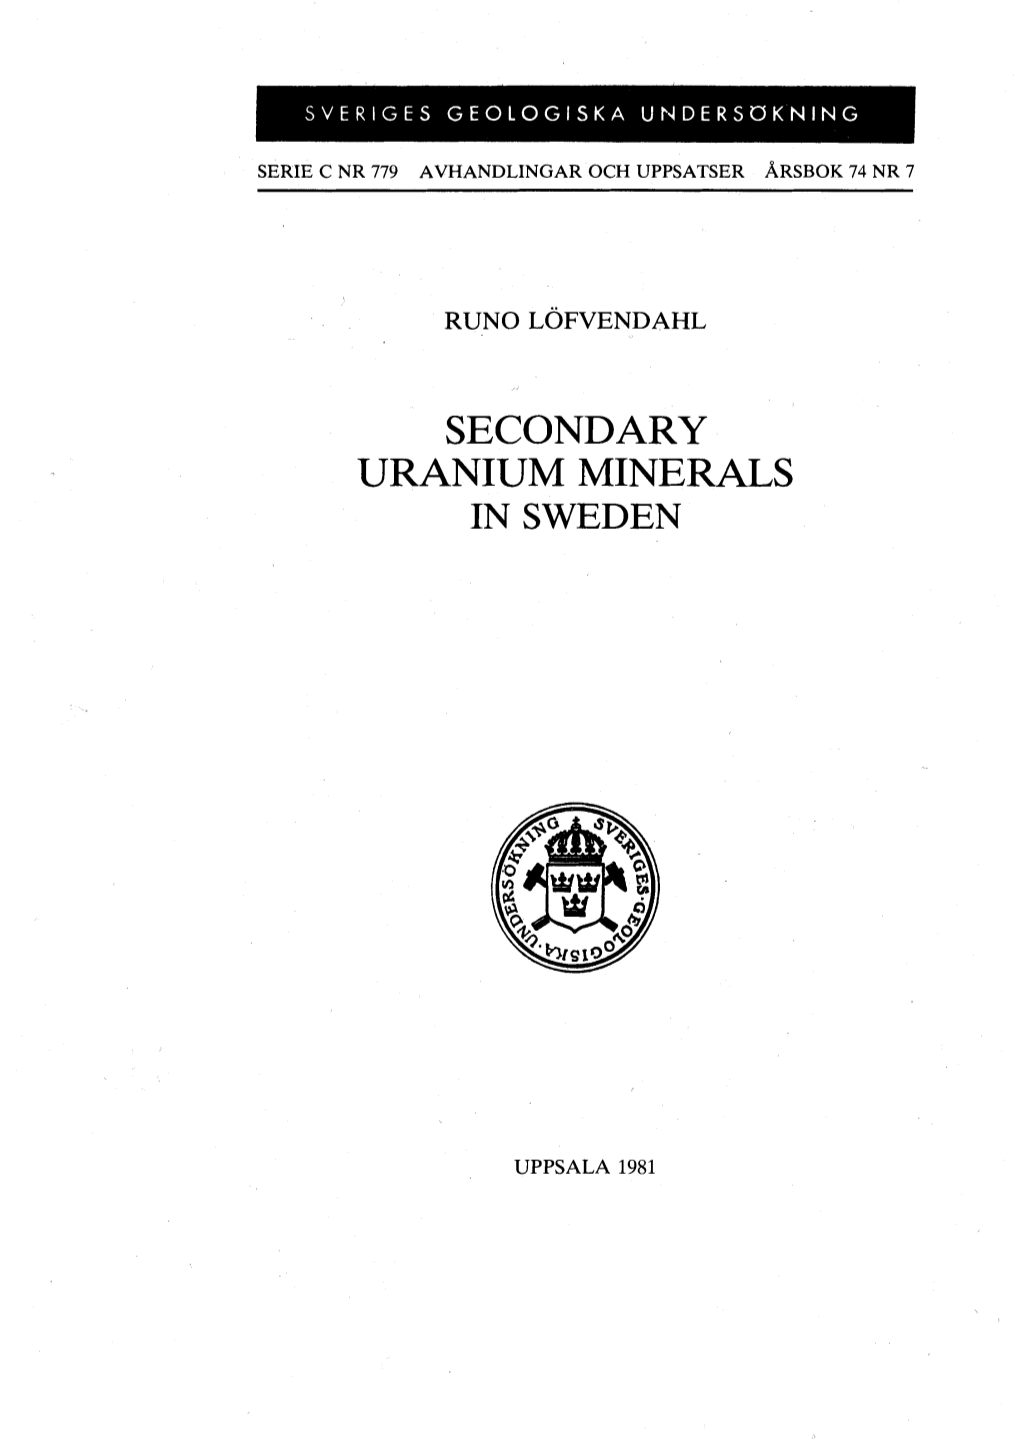 Secondary Uranium Minerals in Sweden